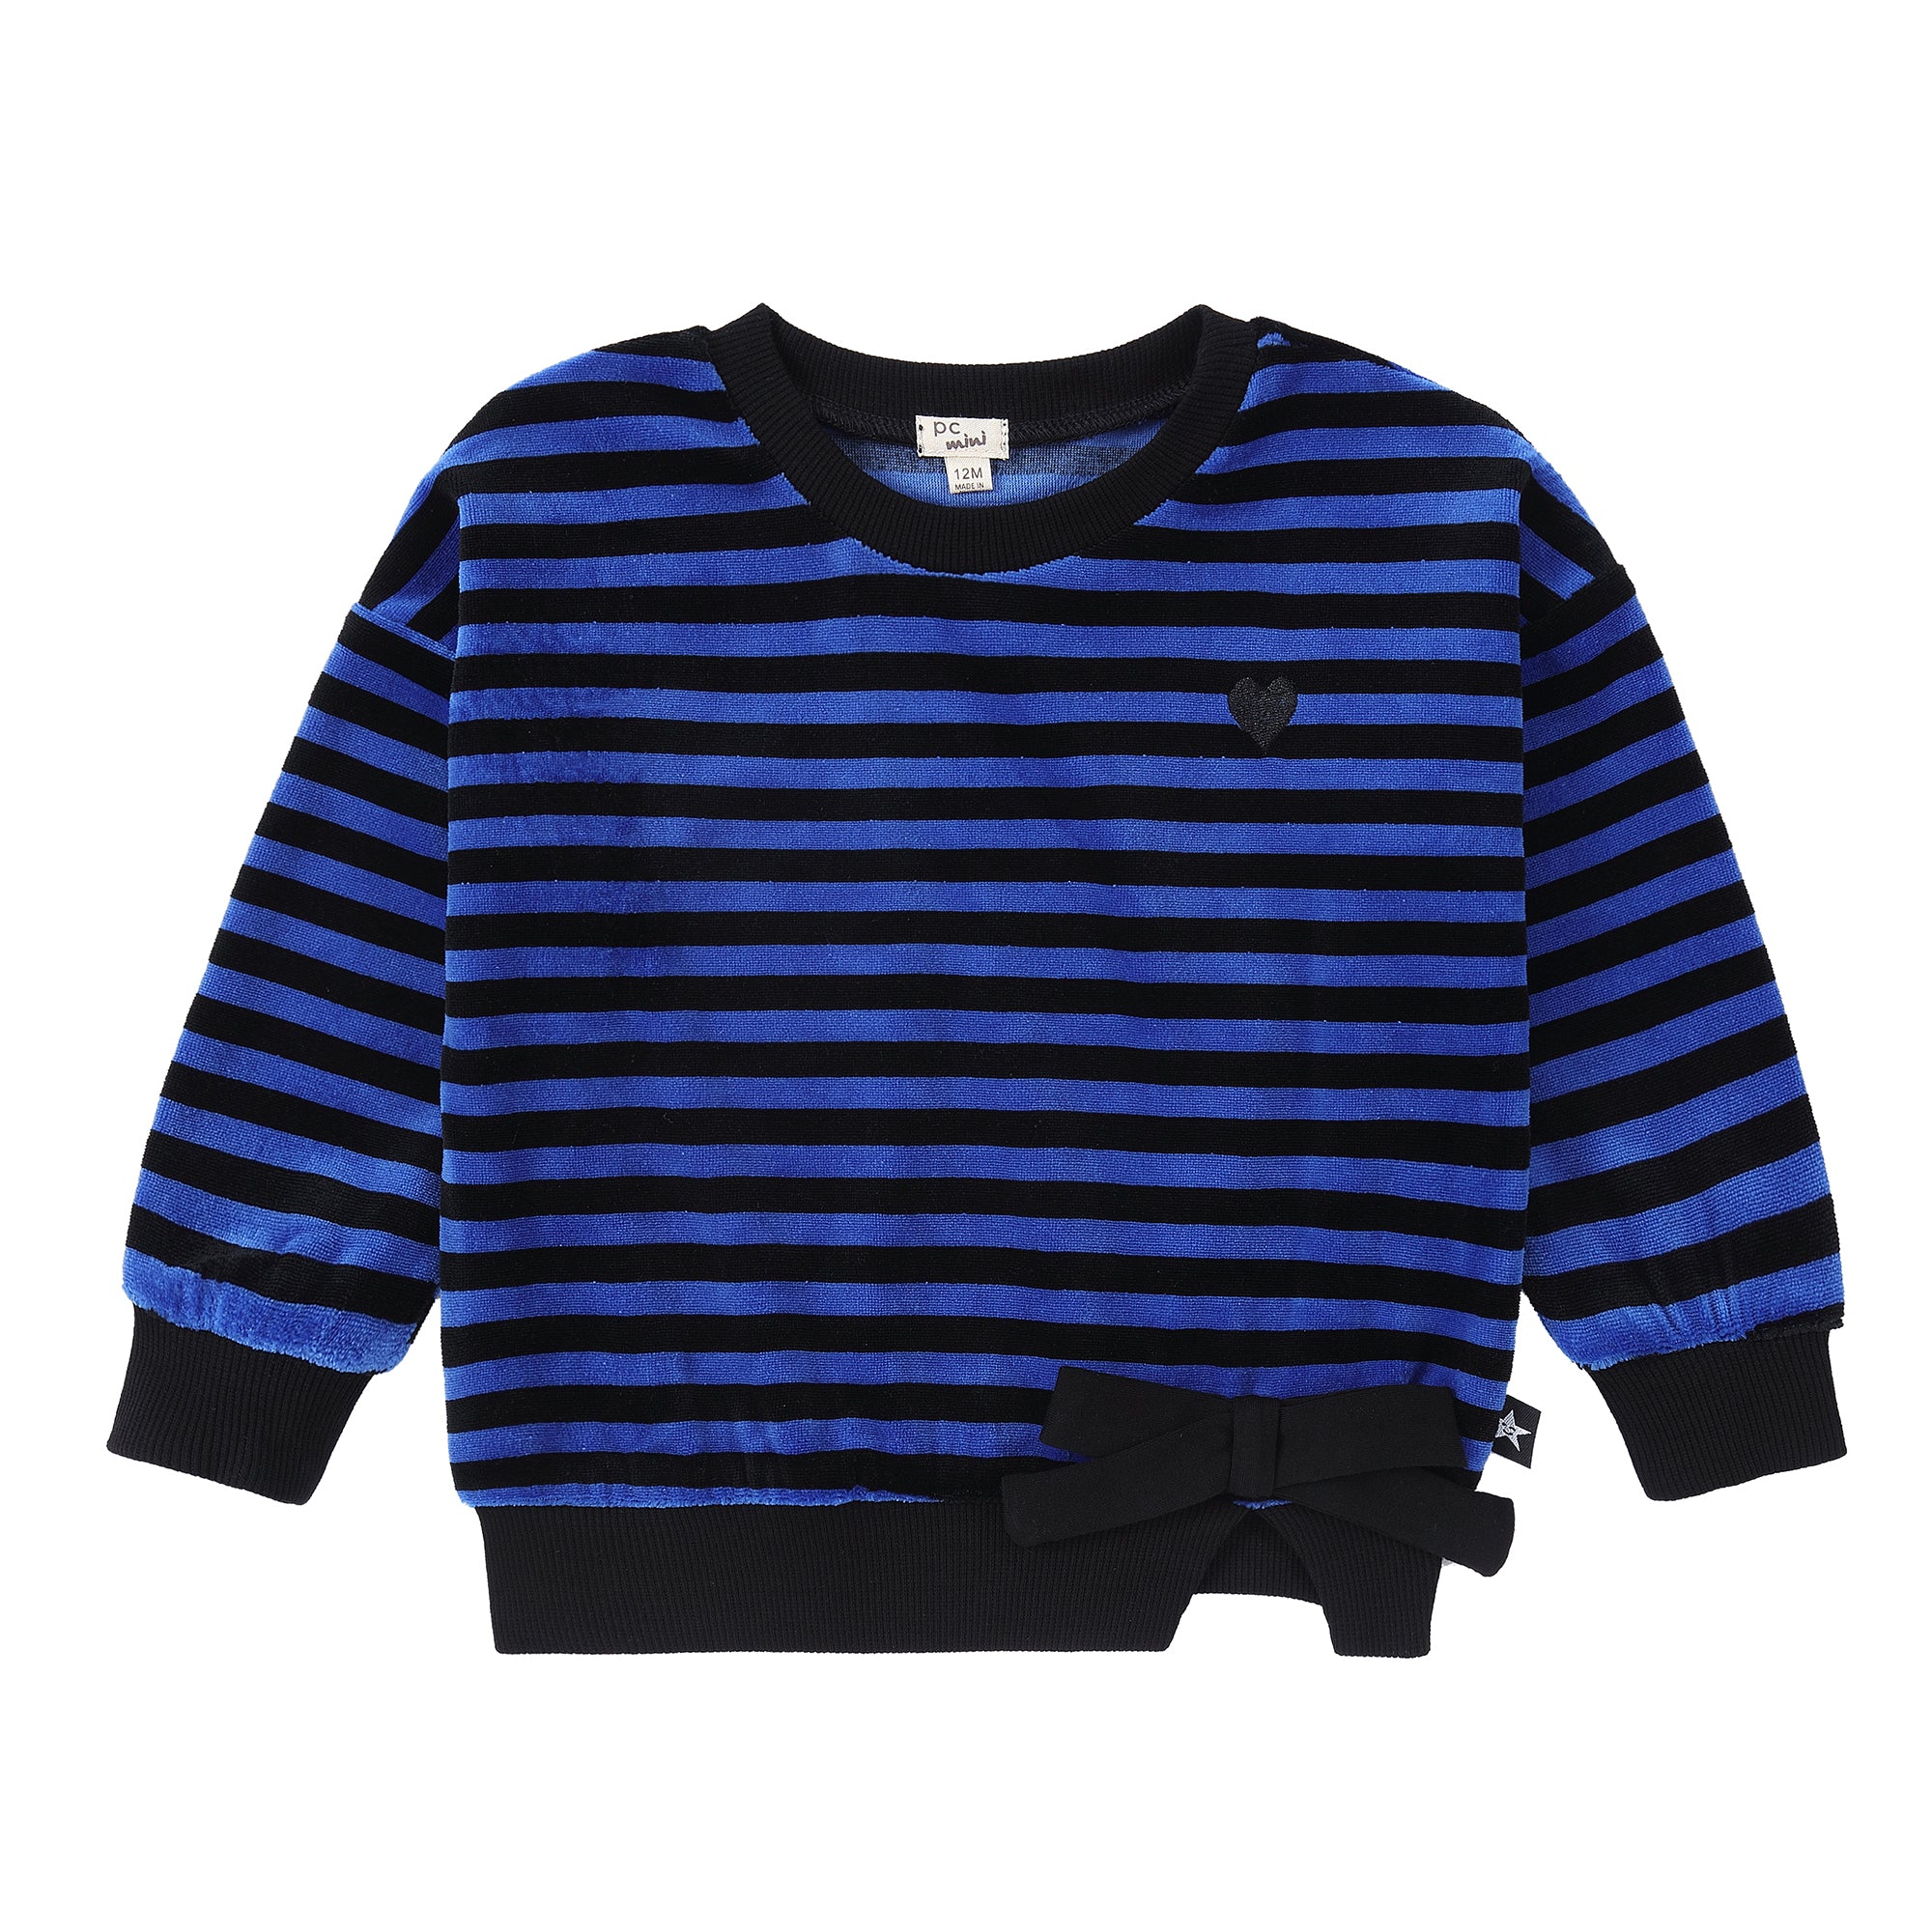 Royal Blue and Black Striped Velour Sweatshirt